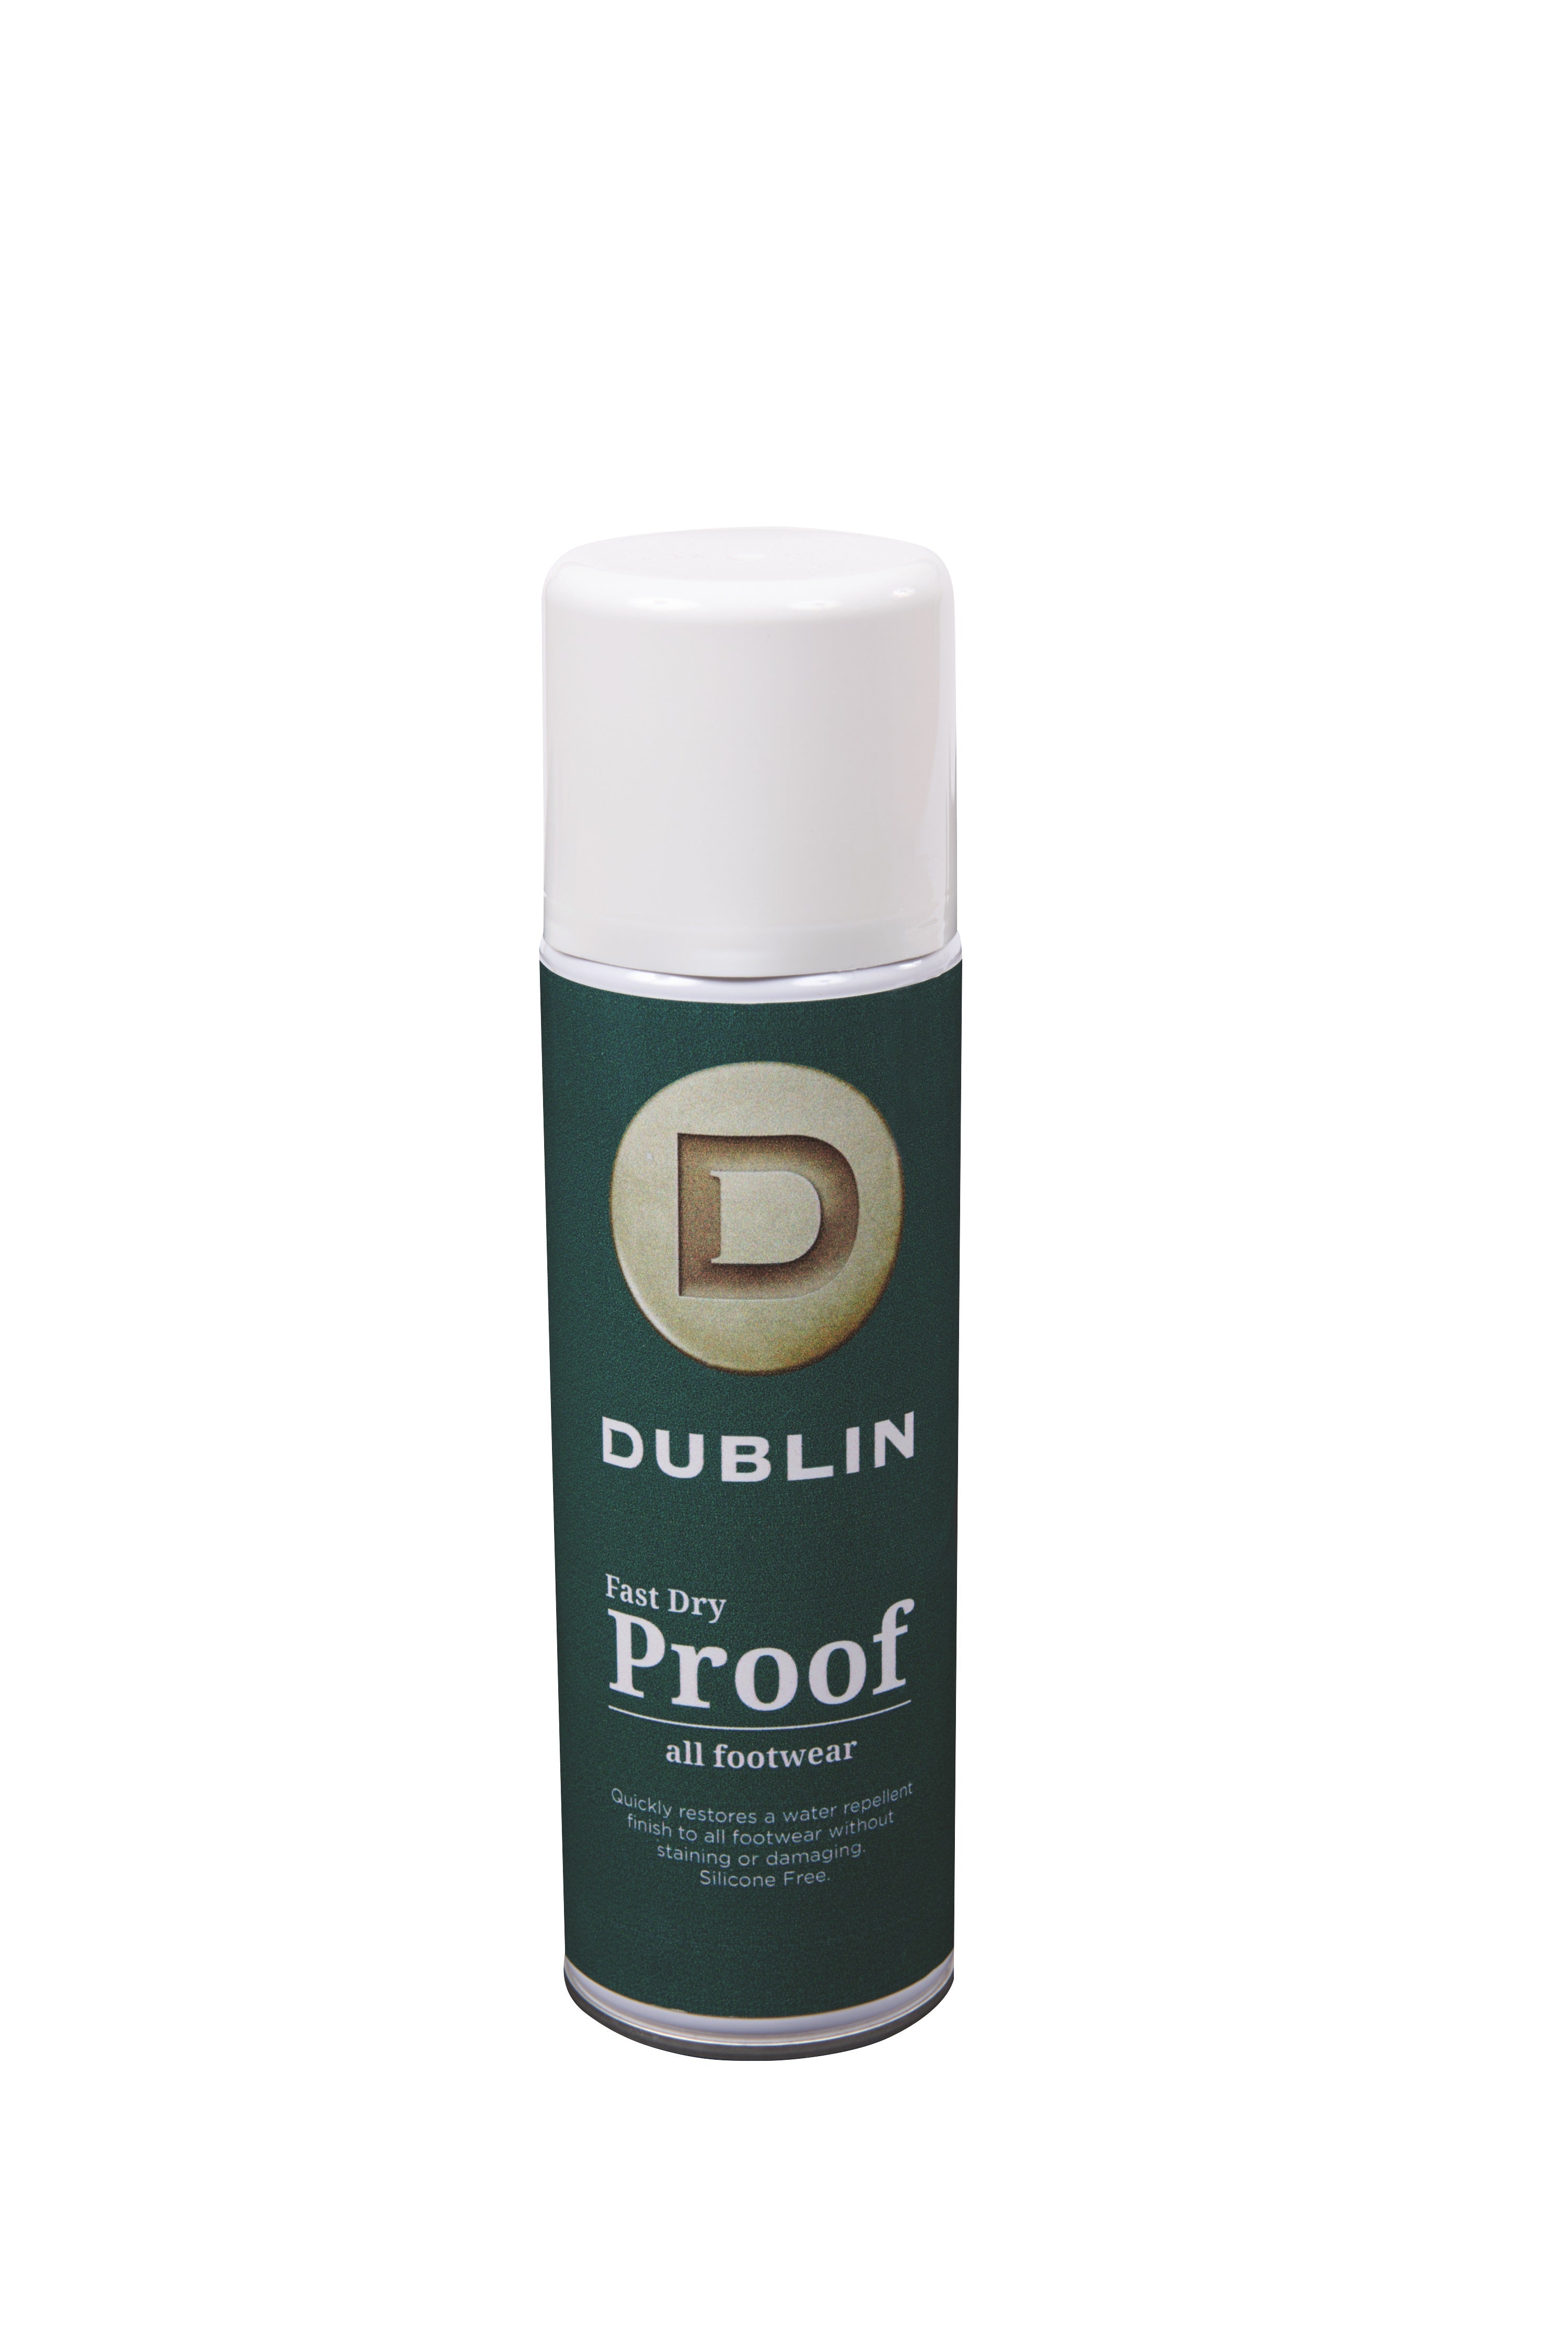 Dublin Fast Dry Proof Spray